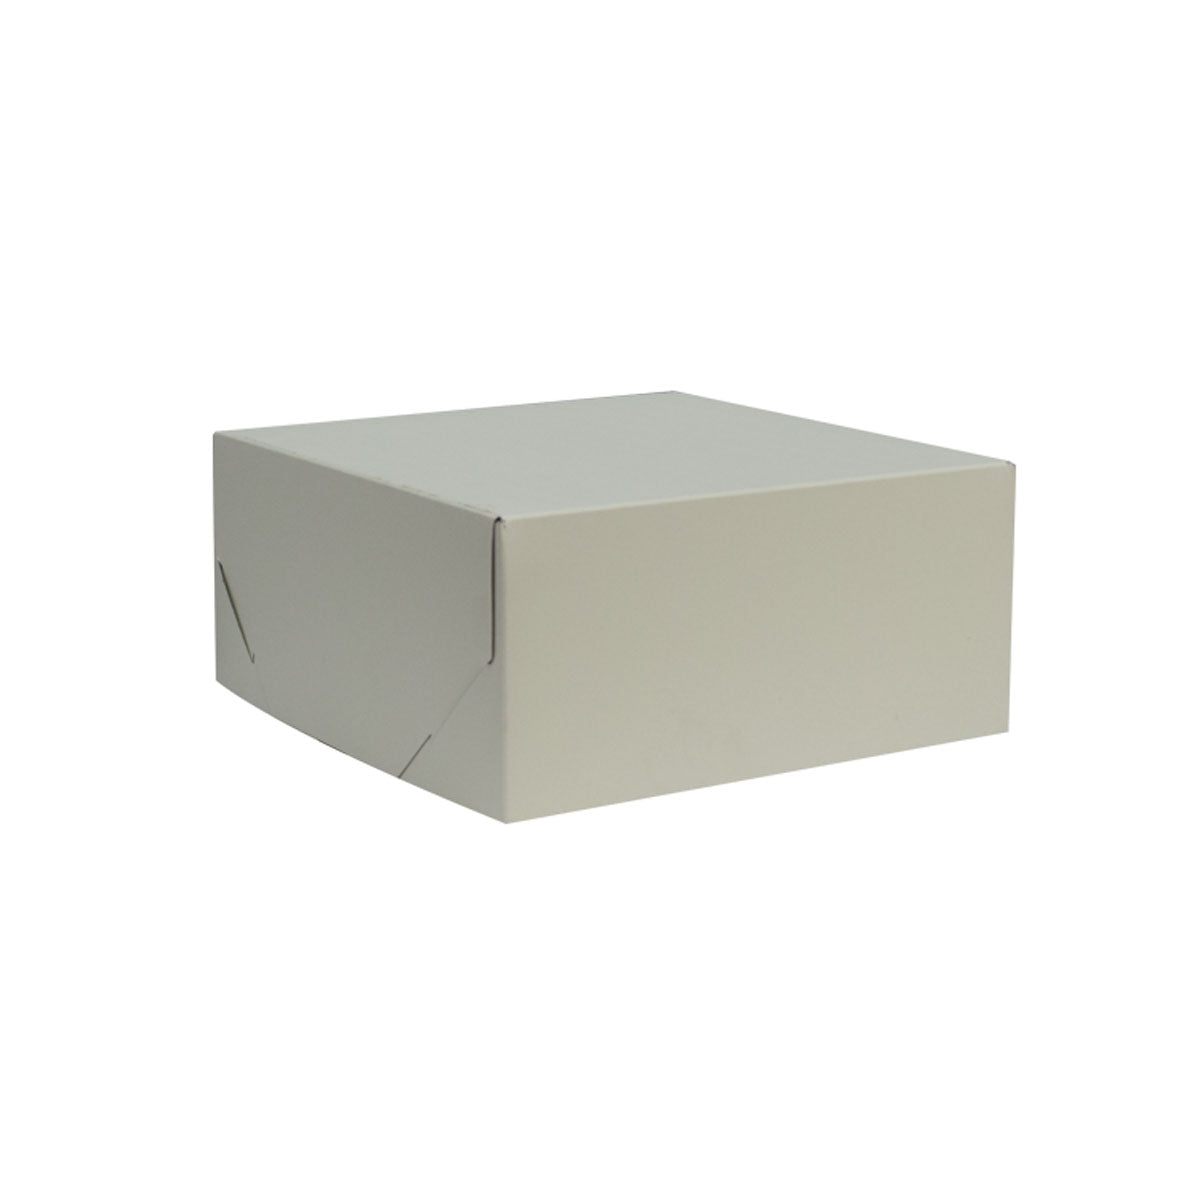 2 Piece Gift Box Pearl Cream 305x305x127mm